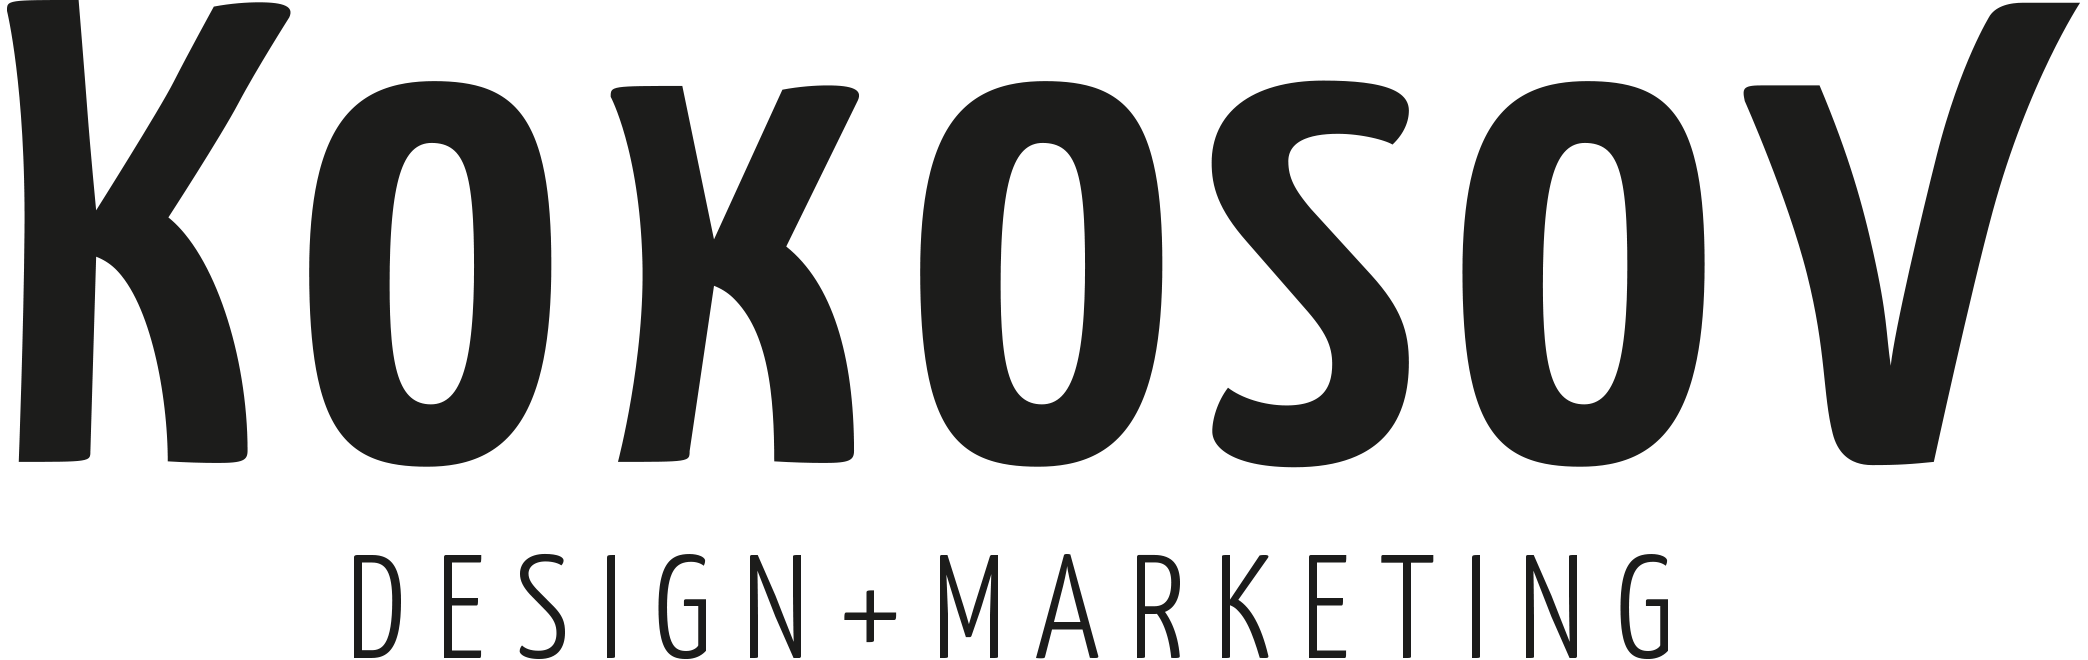 Kokosov Design+Marketing profile on Qualified.One